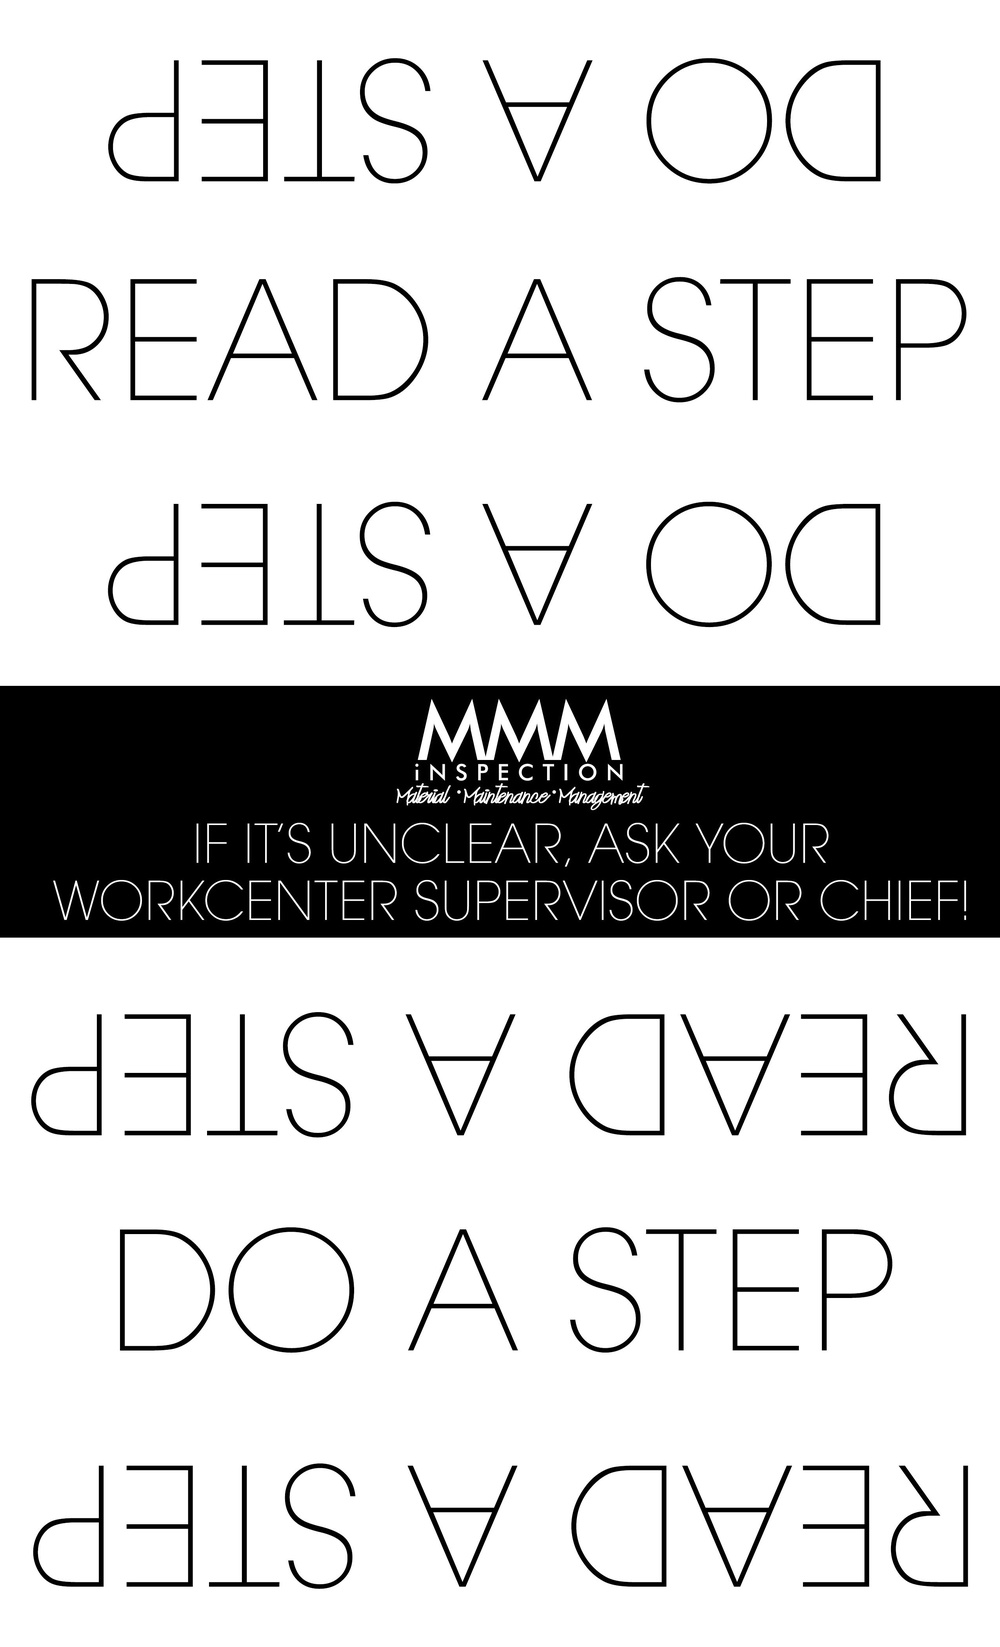 Read a Step, Do a Step